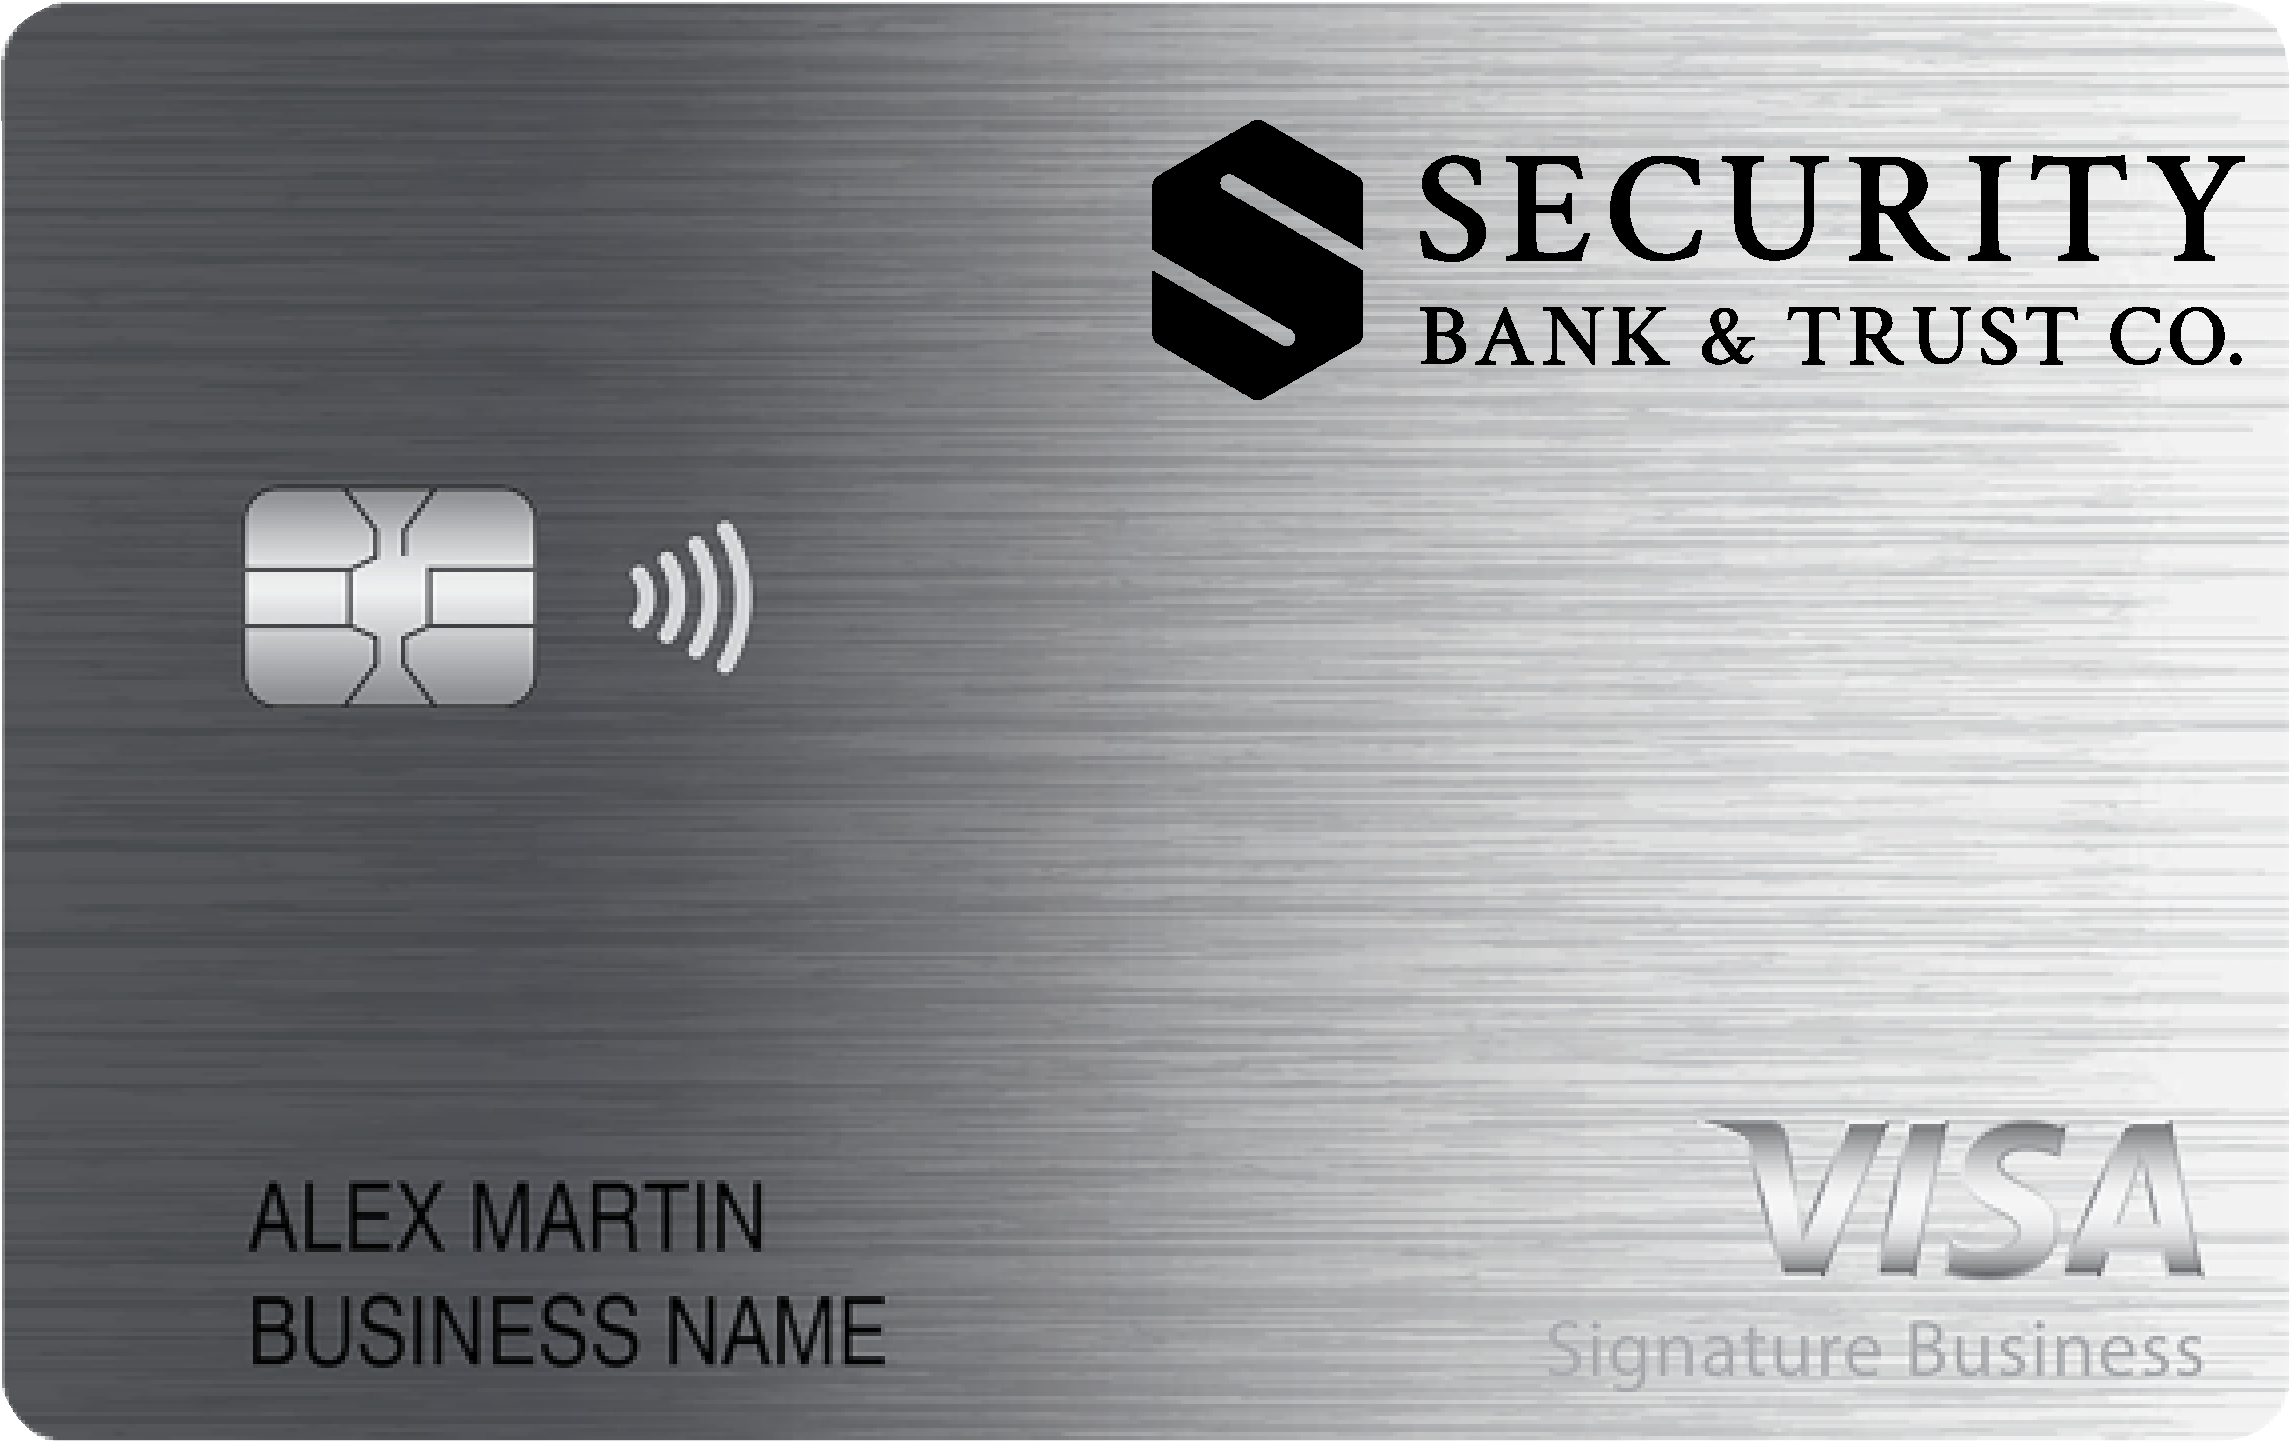 Security Bank & Trust Co. Smart Business Rewards Card